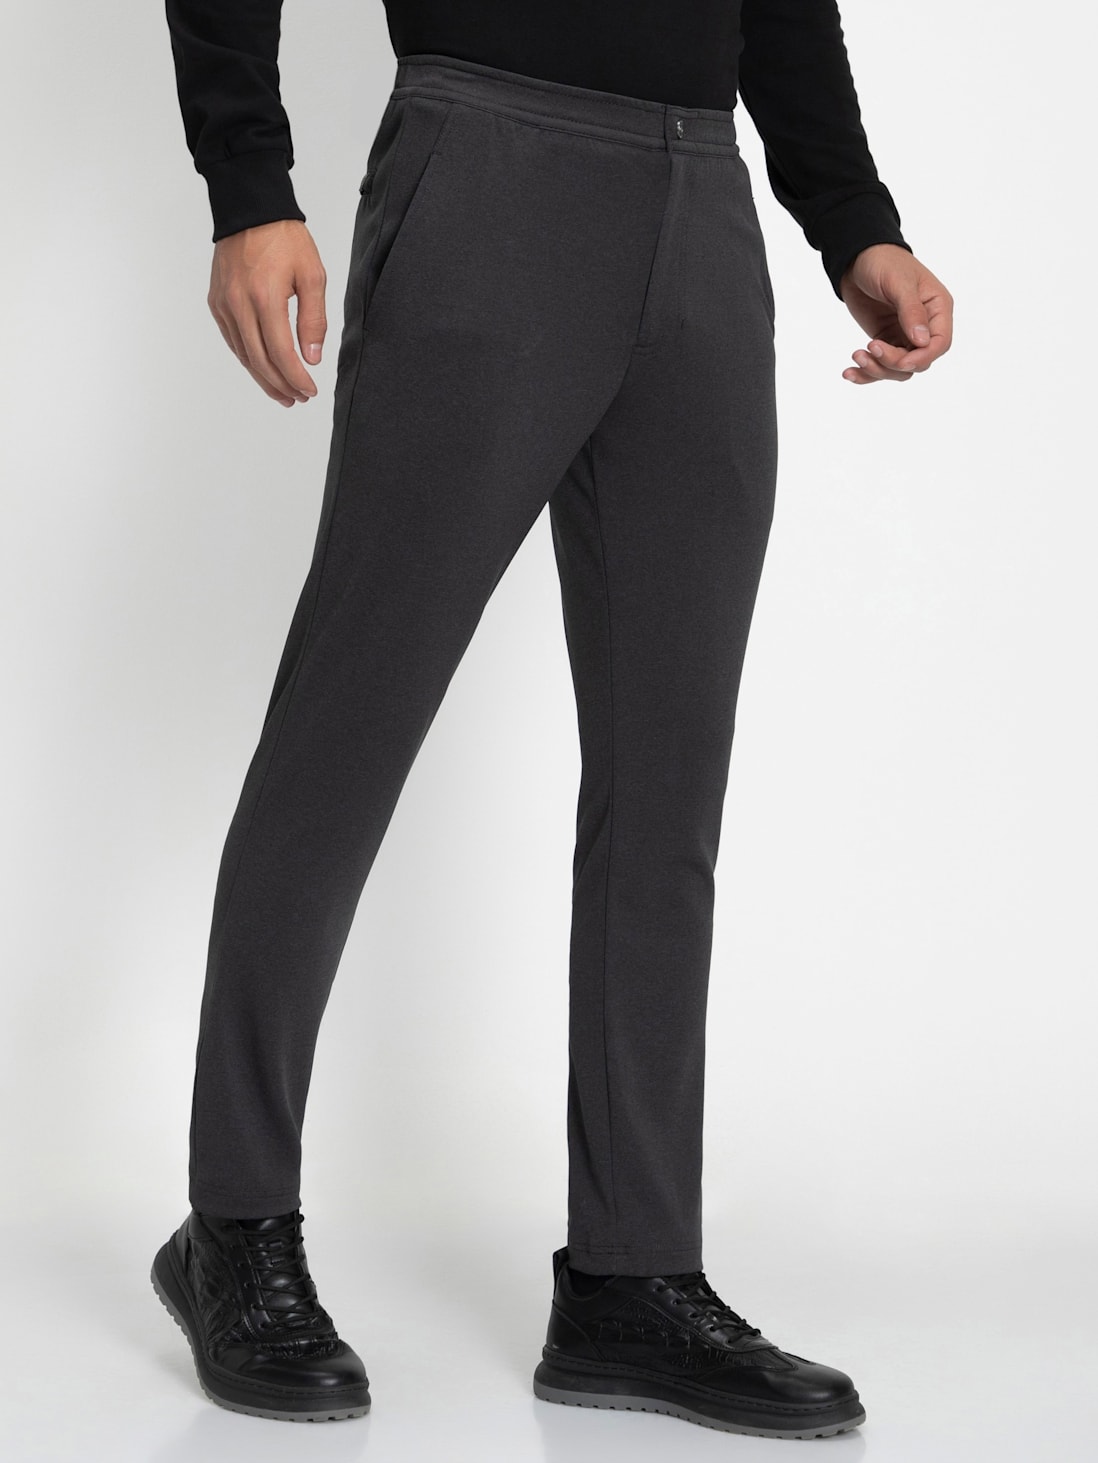 Zanella  Tailored Trousers for Men since 1954 